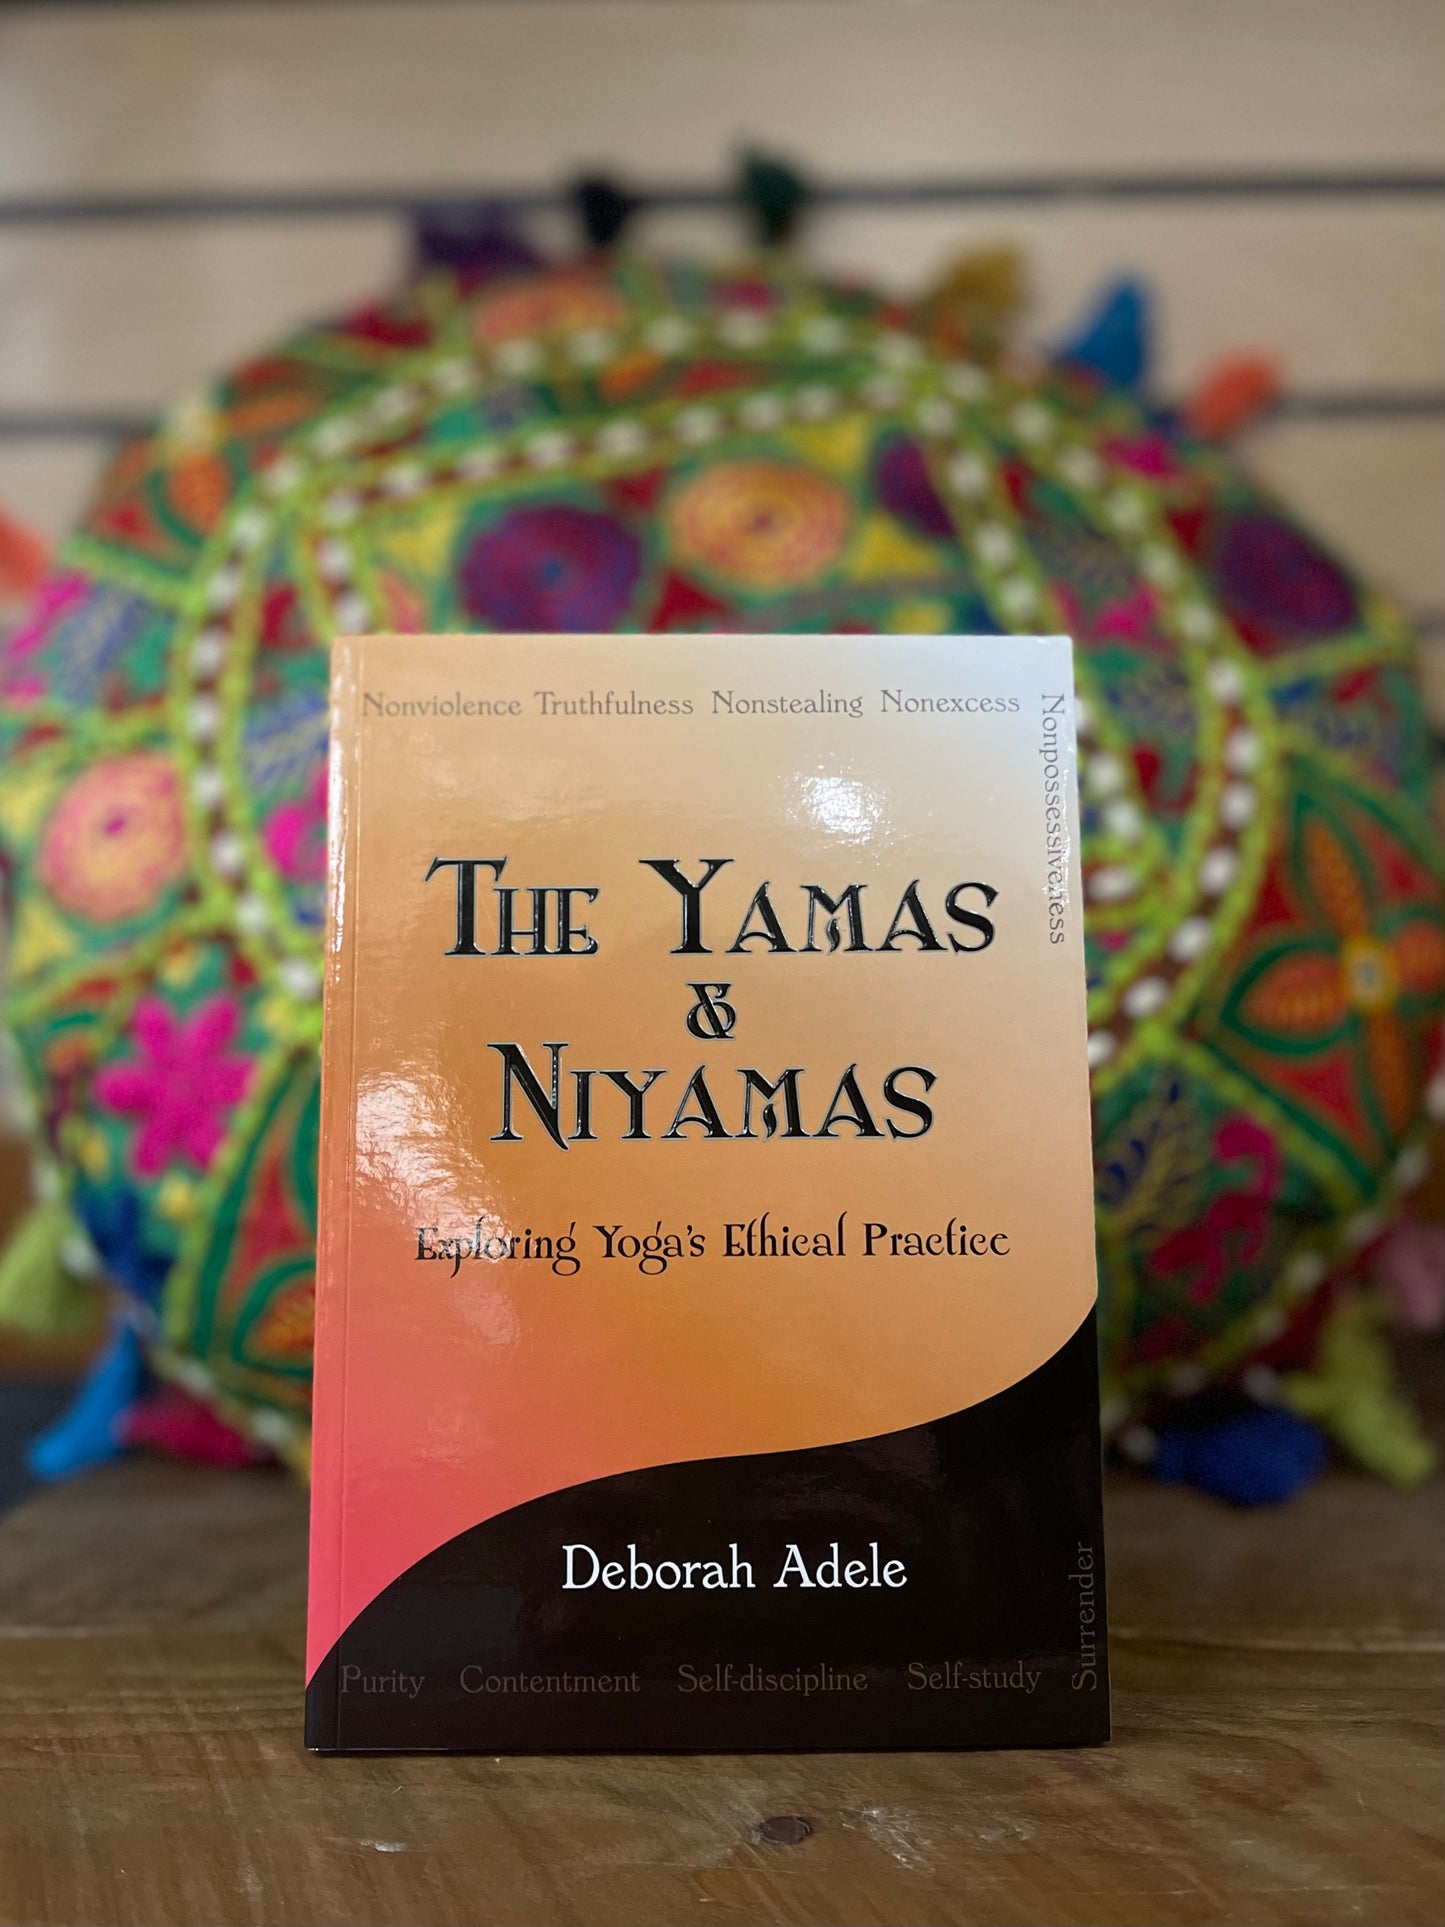 The Yamas and Niyamas-Exploring Yoga's Ethical Practice